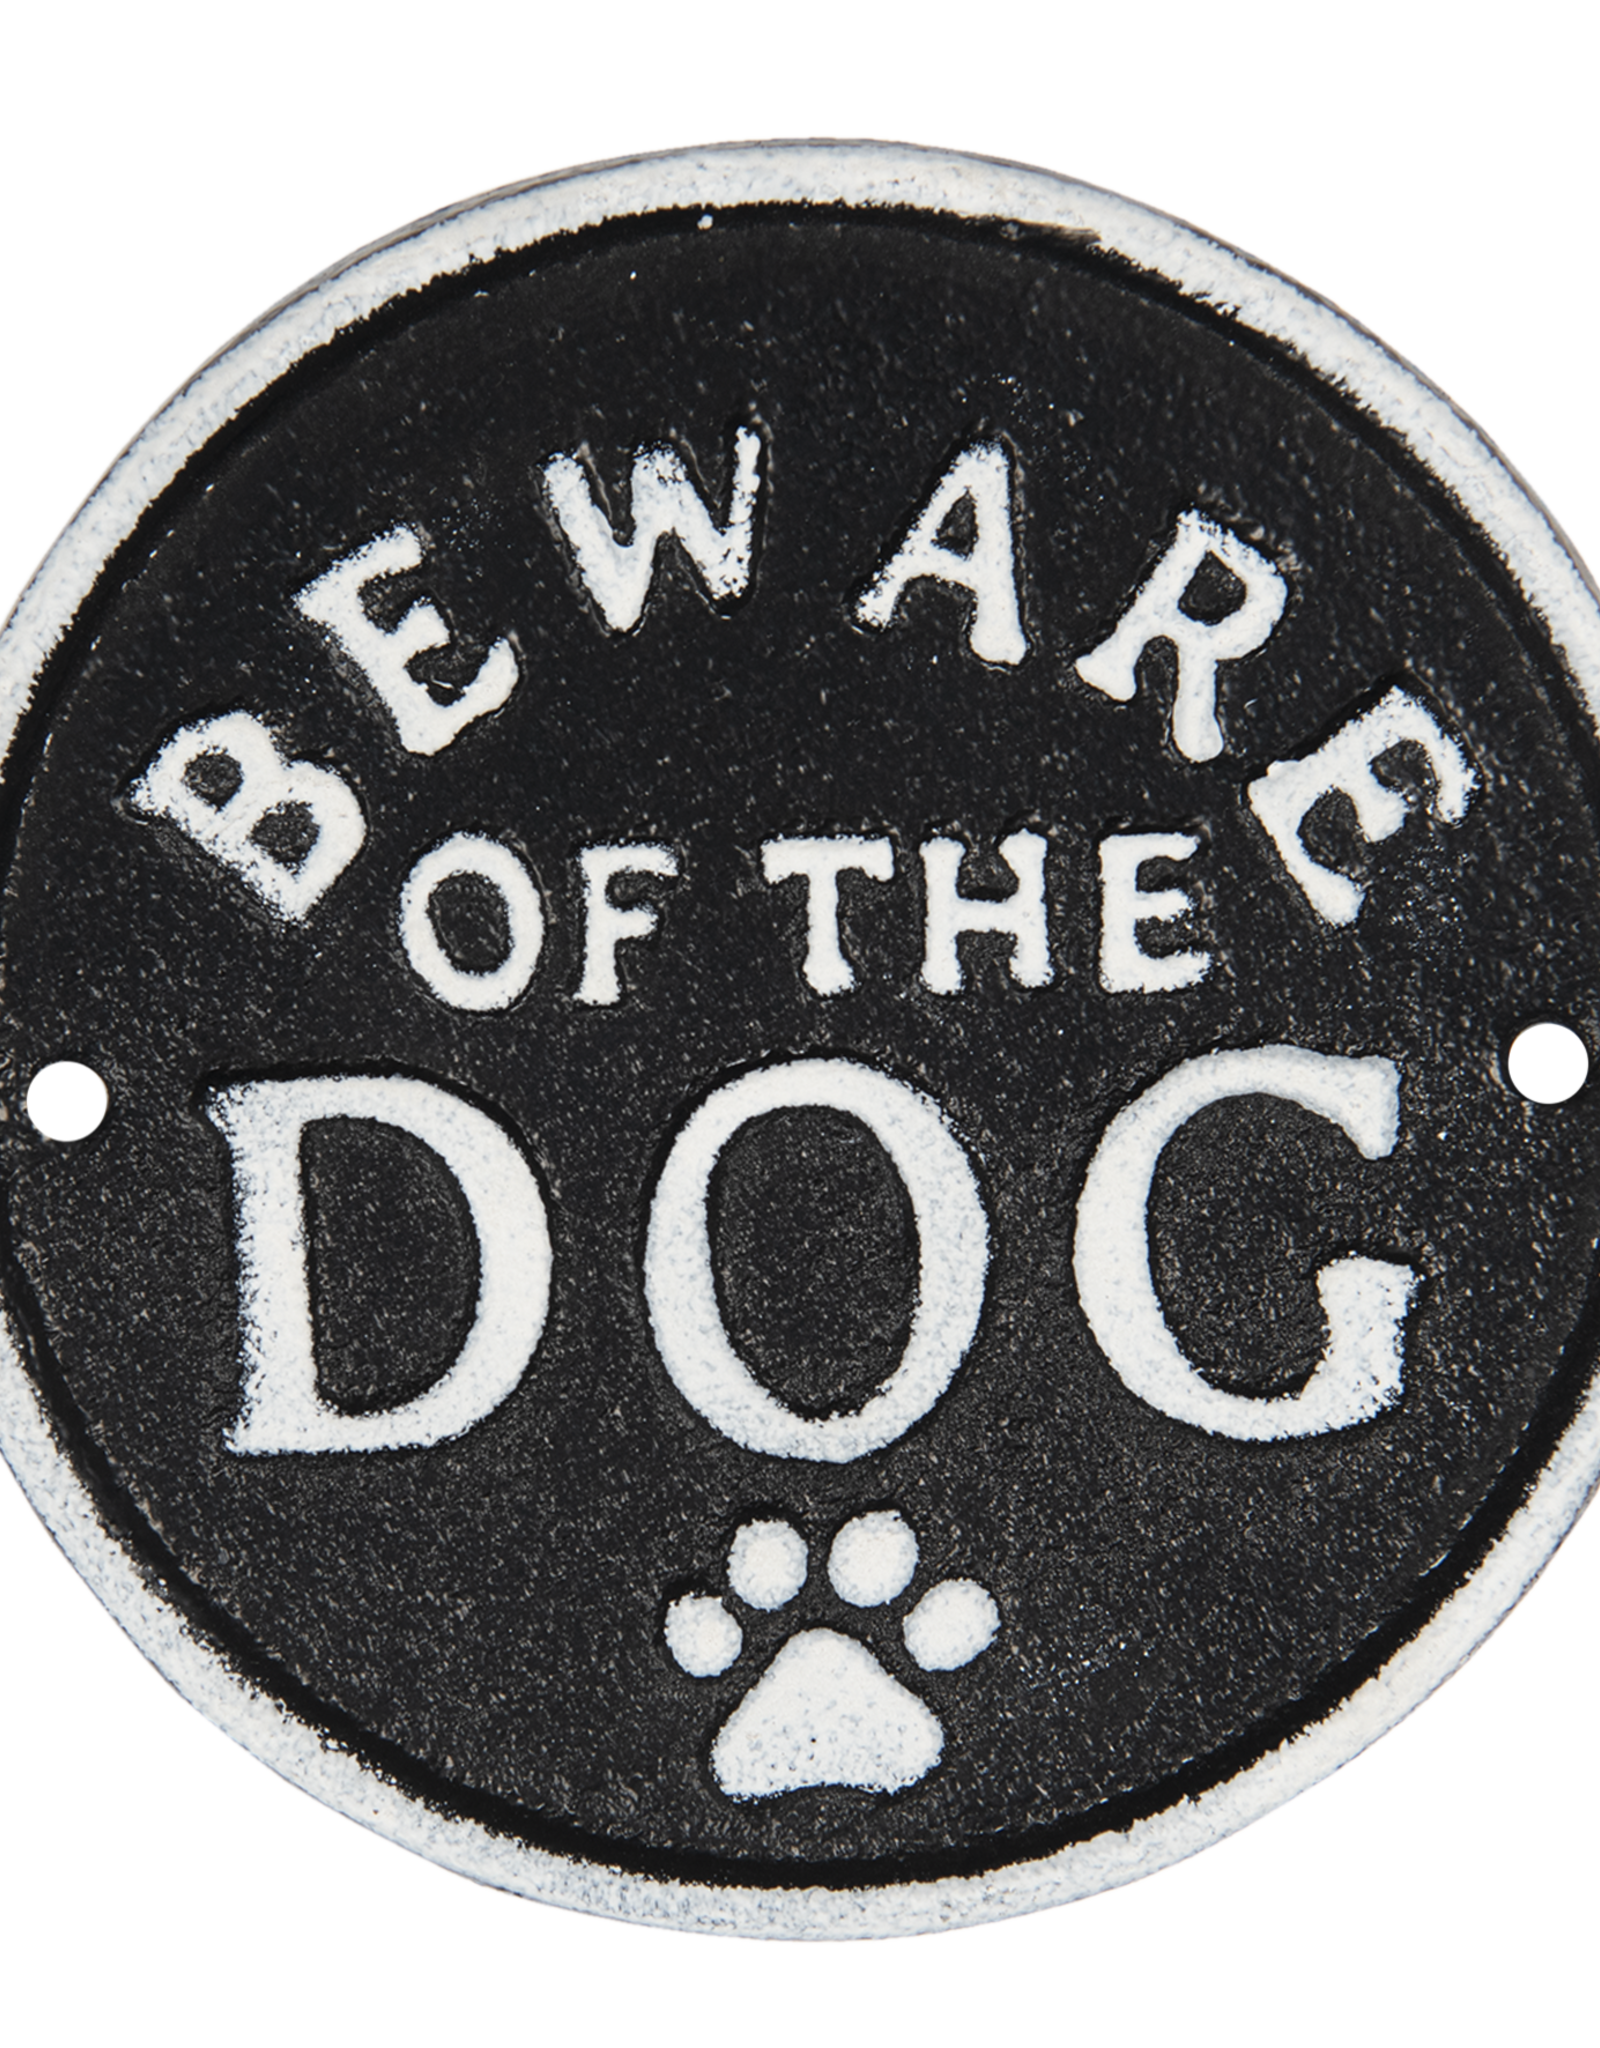 Tekstbord "Beware of the dog"